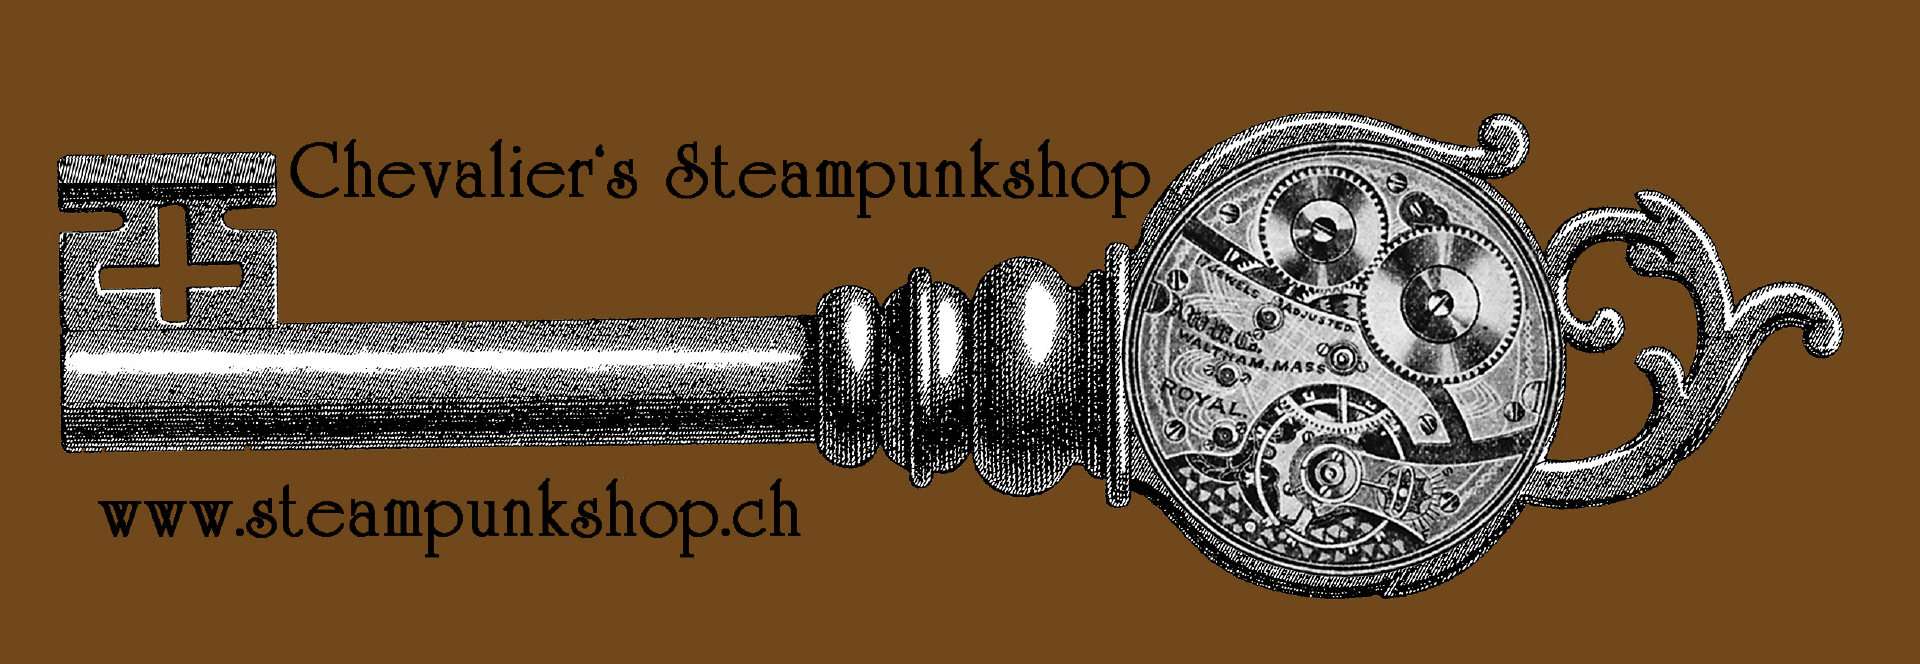 http://www.steampunkshop.ch